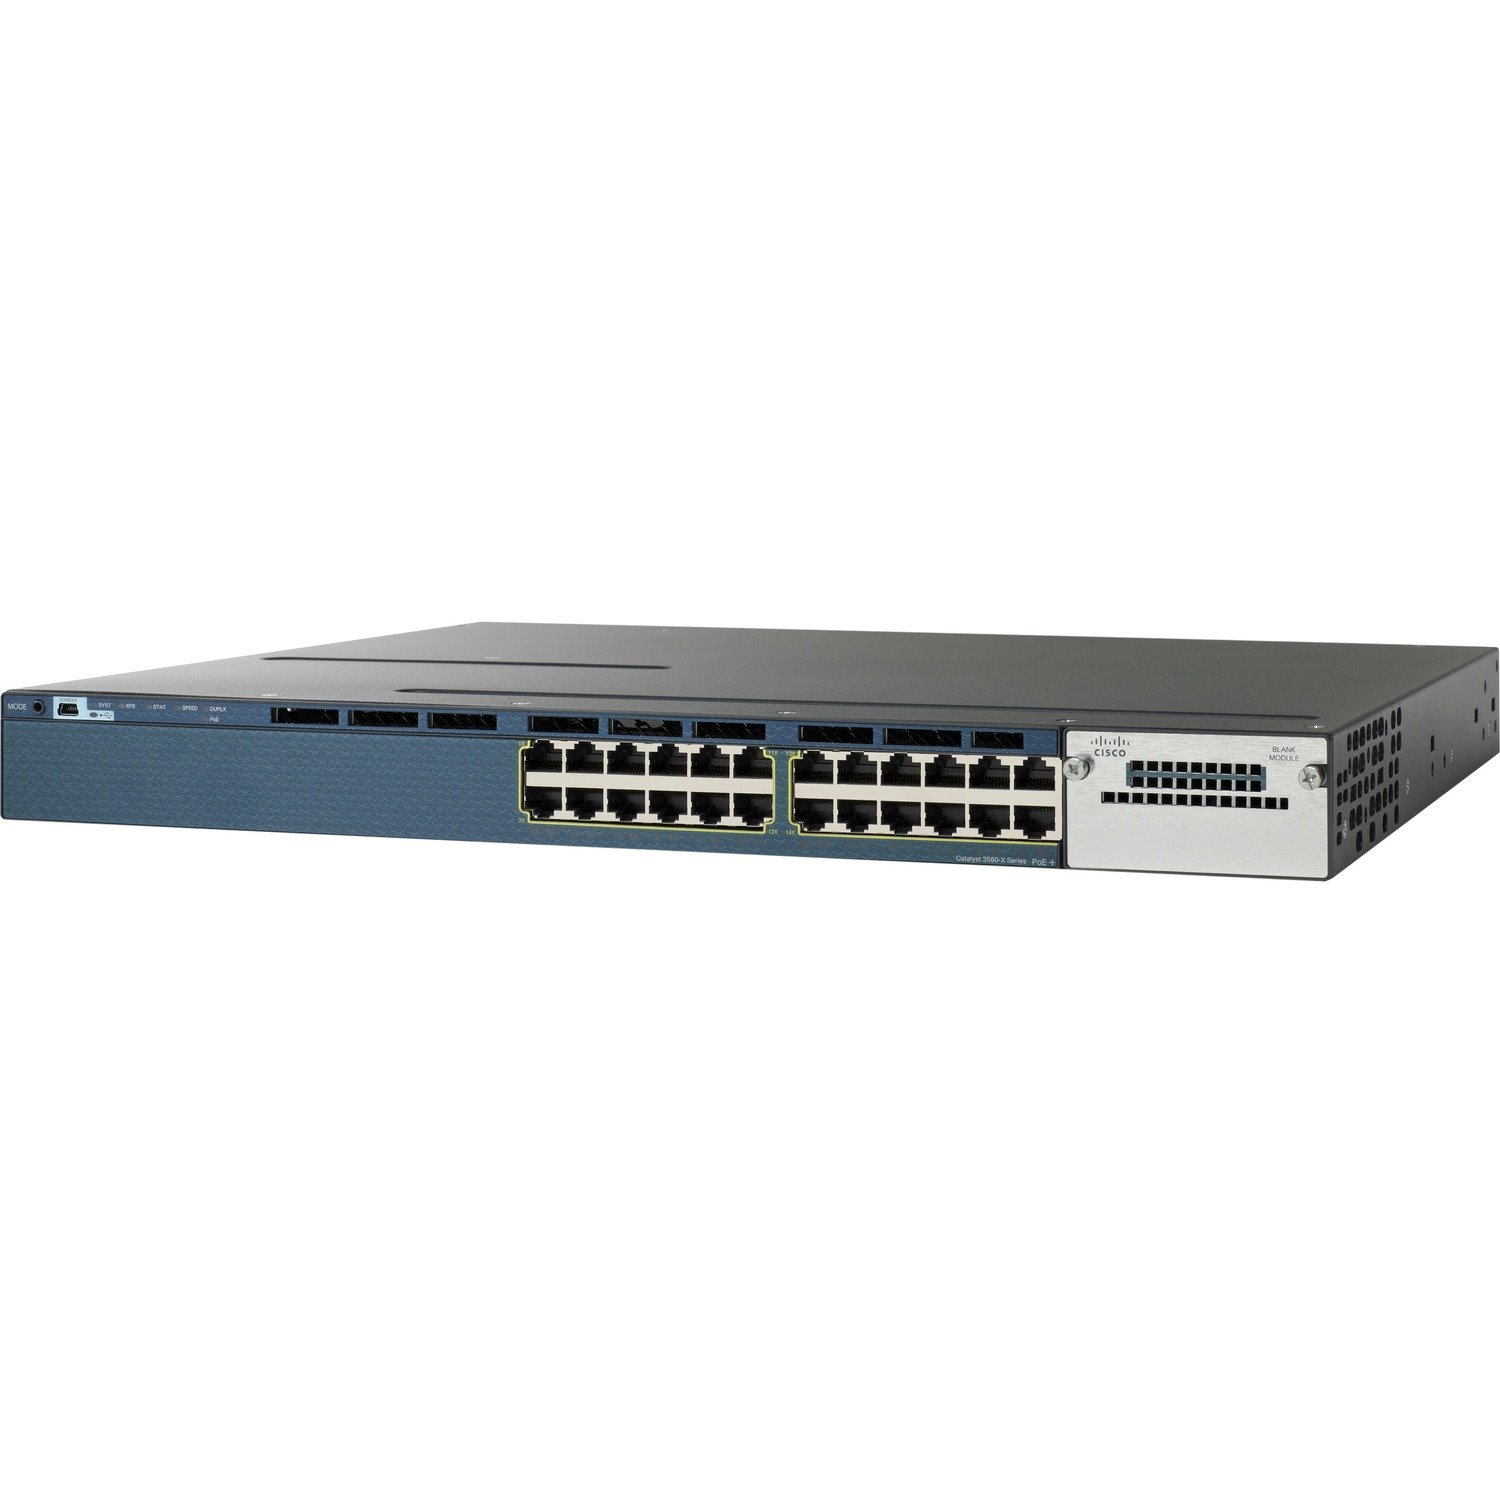 Cisco Catalyst 3560X-24T-E Ethernet Switch